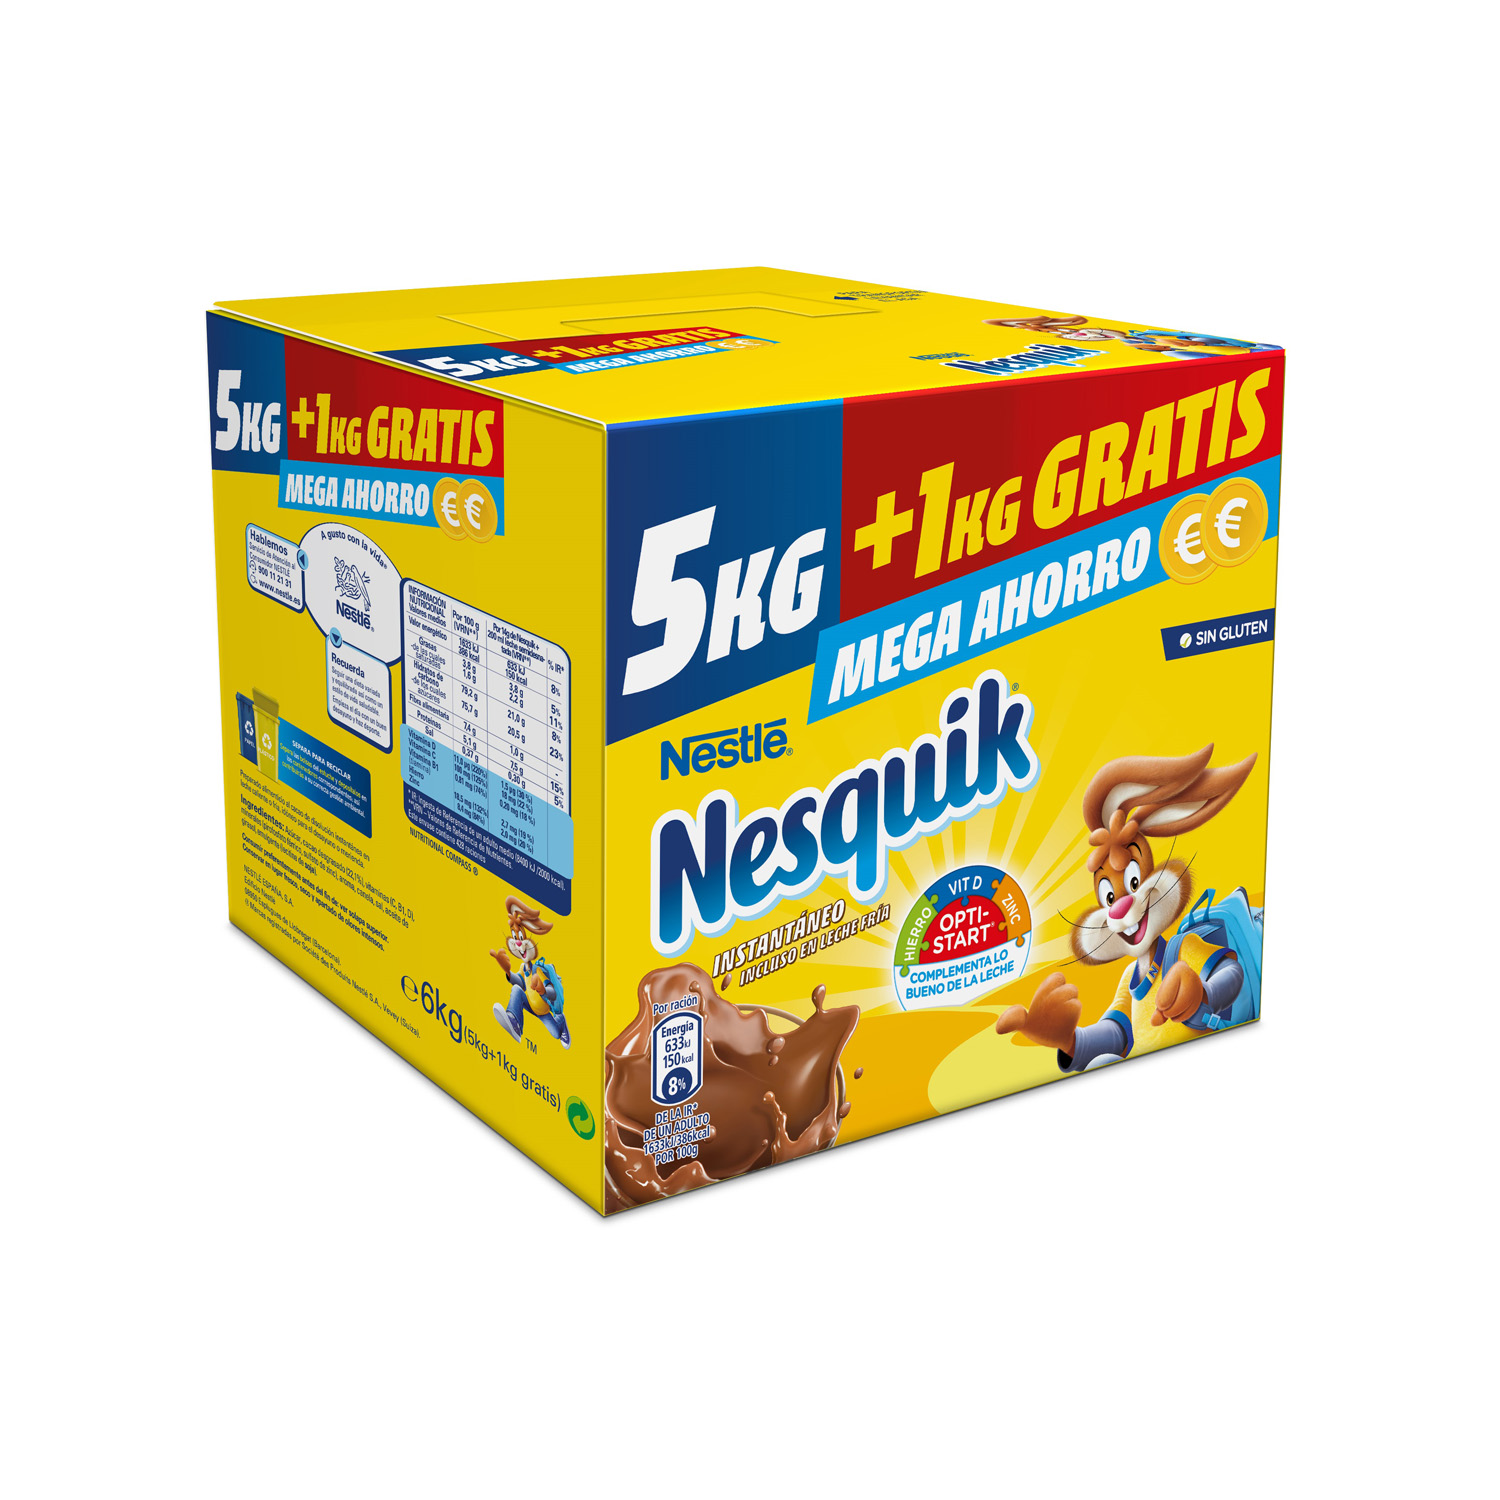 Nestlé Nesquik Cacao Soluble Instantáneo solo 18,2€